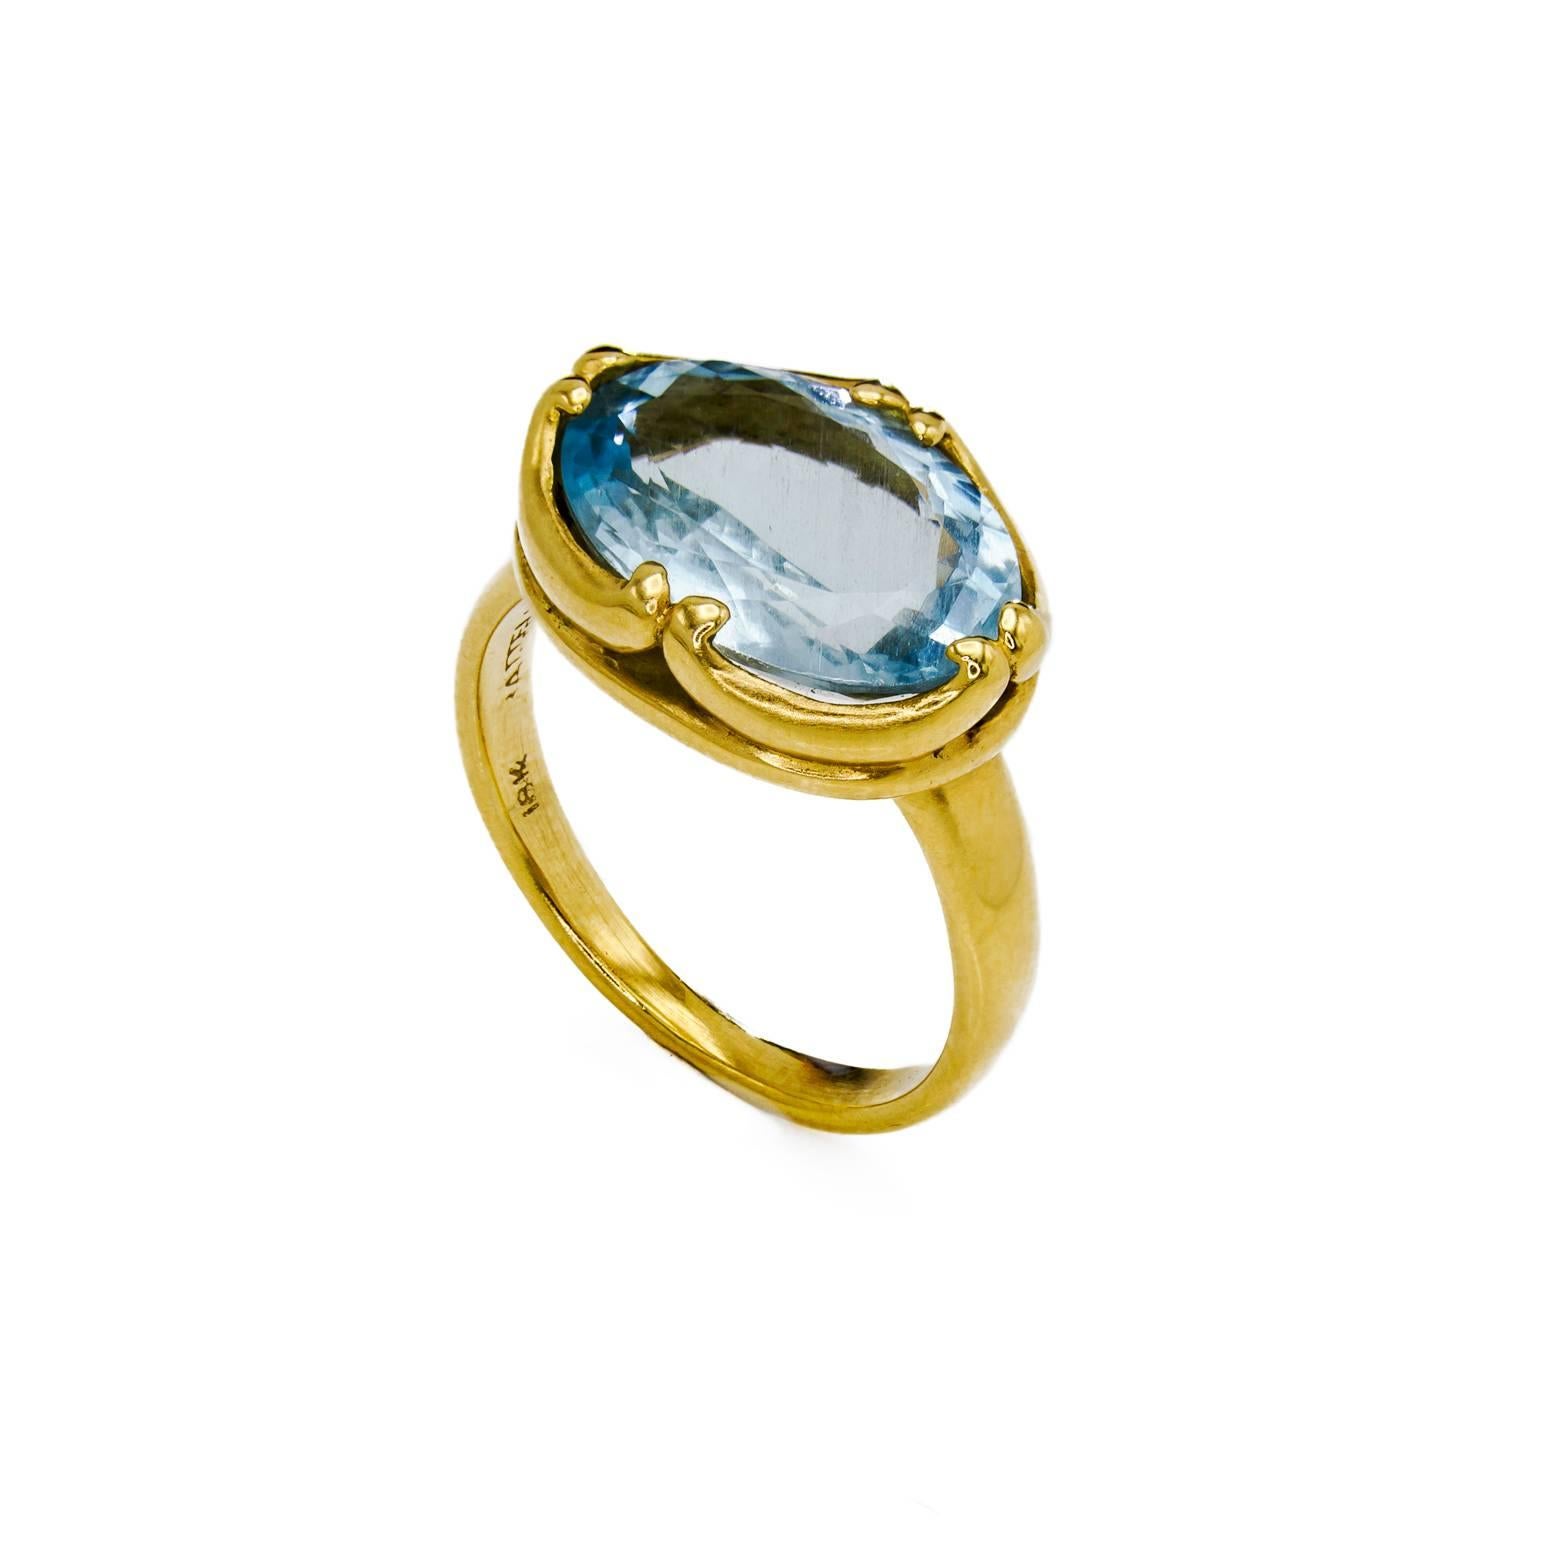 Contemporary Large Oval Aquamarine Gold Ring Byzantine Style